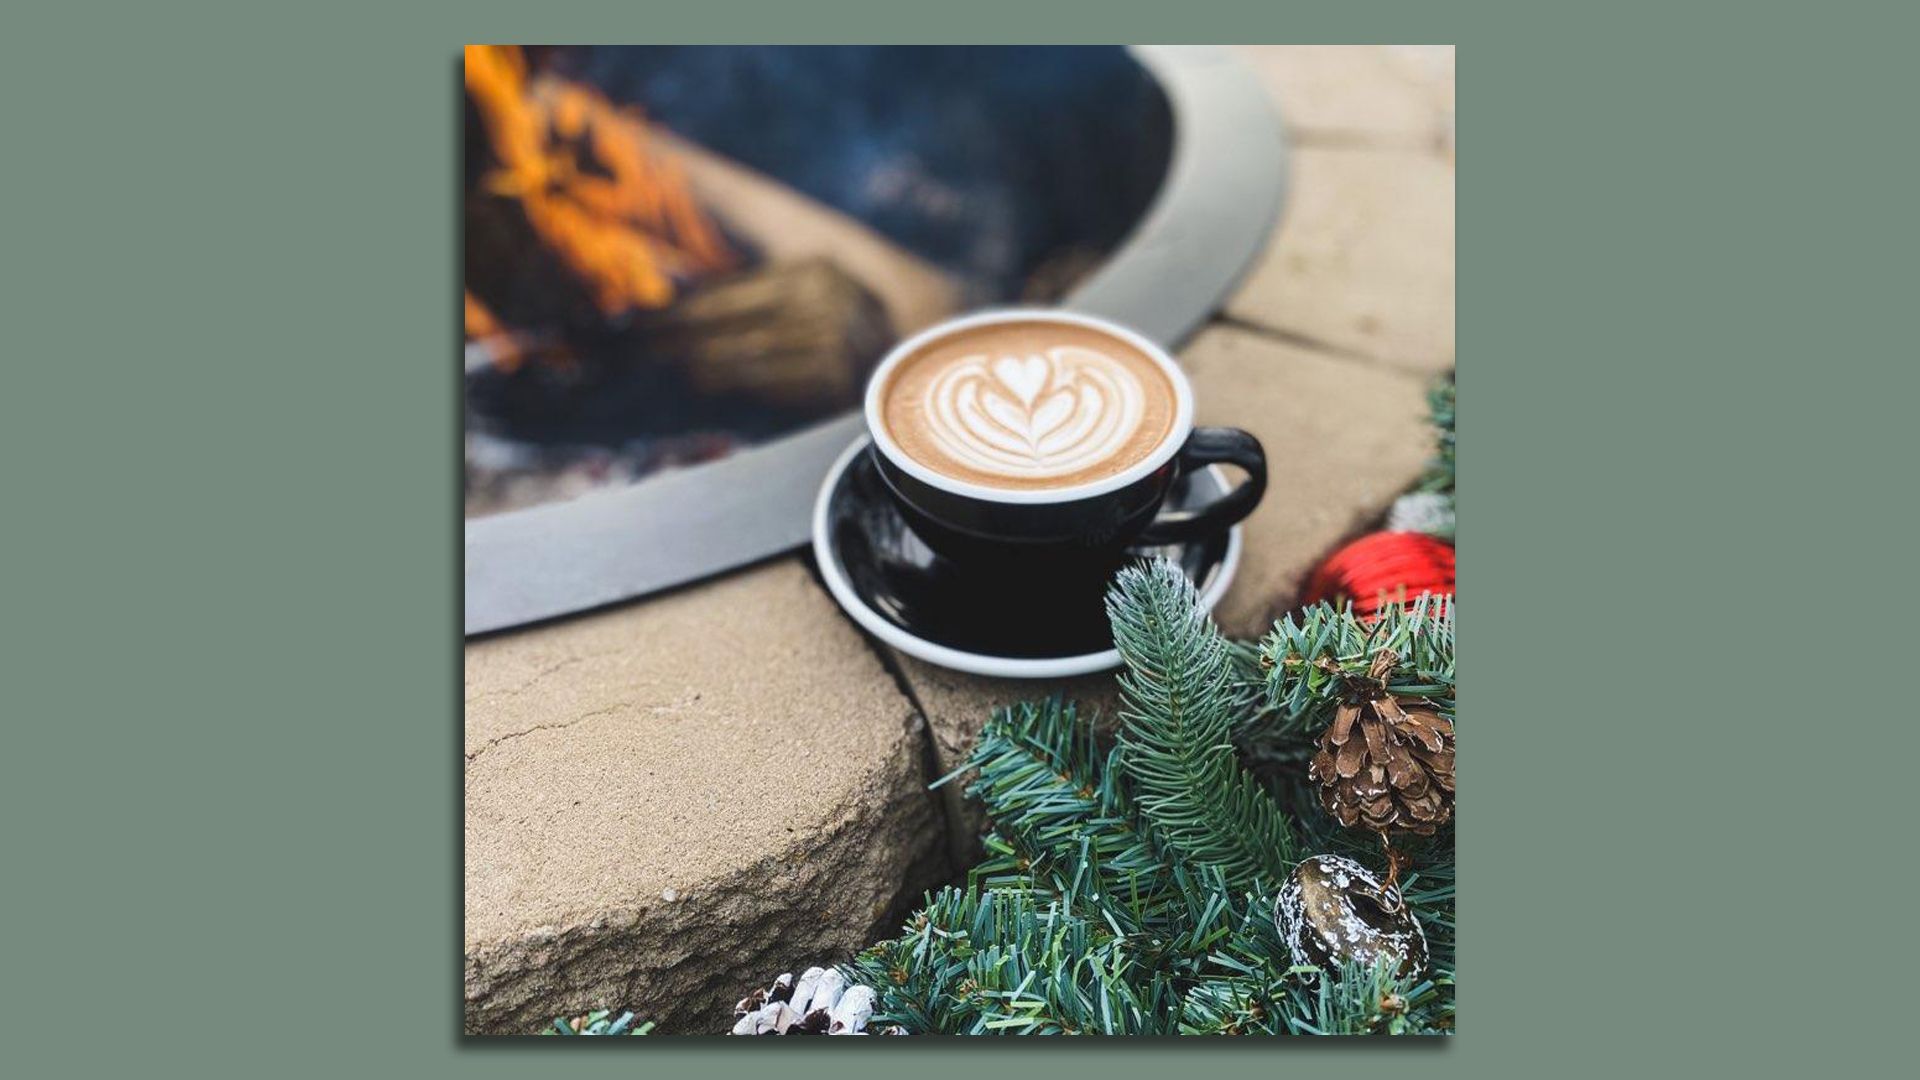 coffee latte art next to a fire